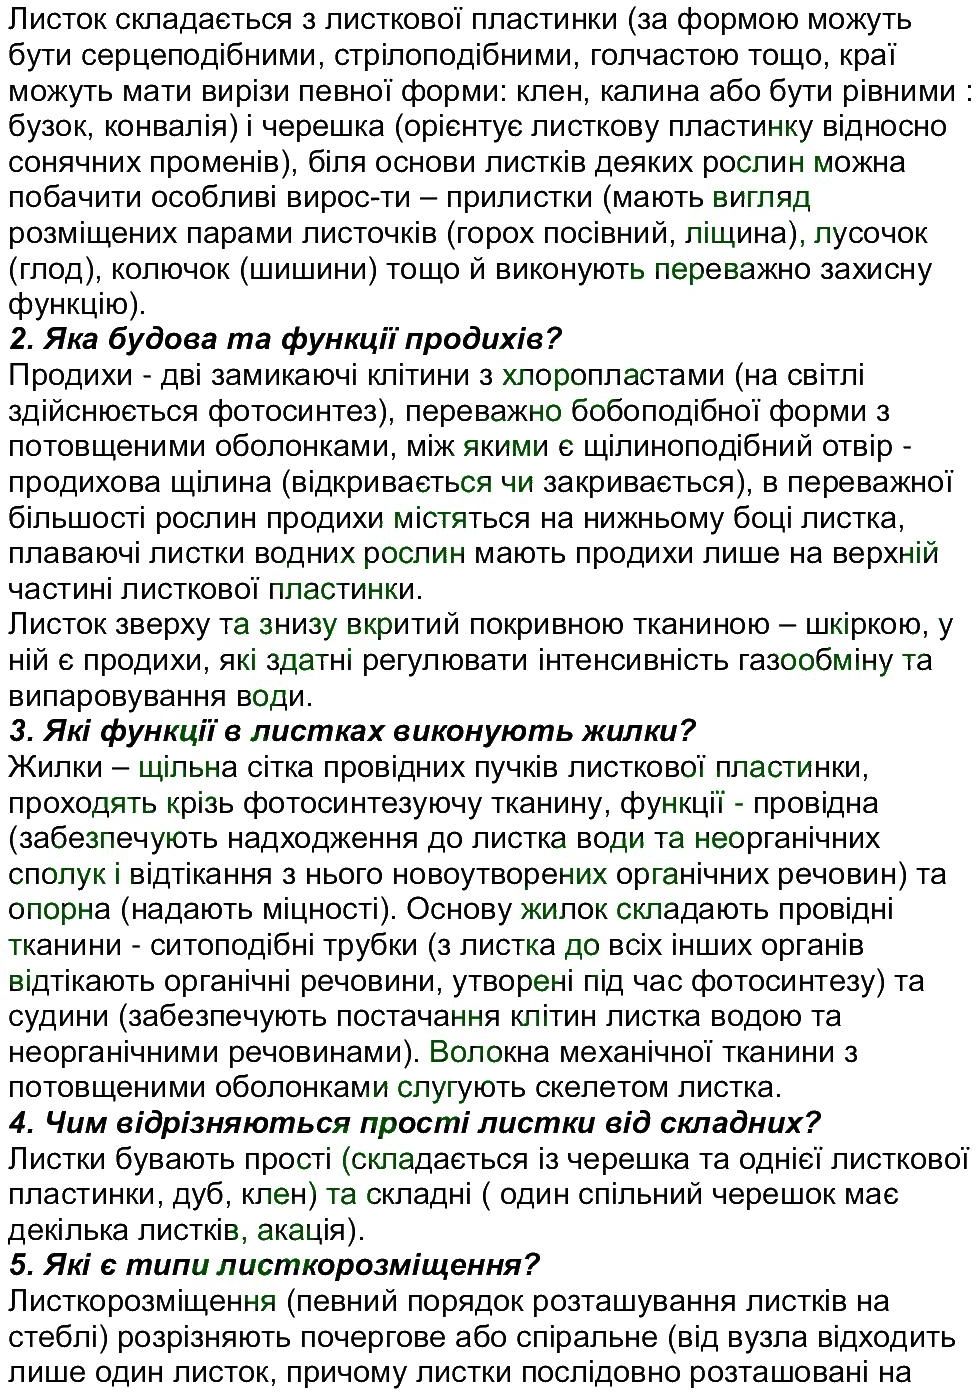 6-biologiya-li-ostapchenko-pg-balan-nyu-matyash-2016--tema-3-roslini-ст107-111-rnd1447.jpg